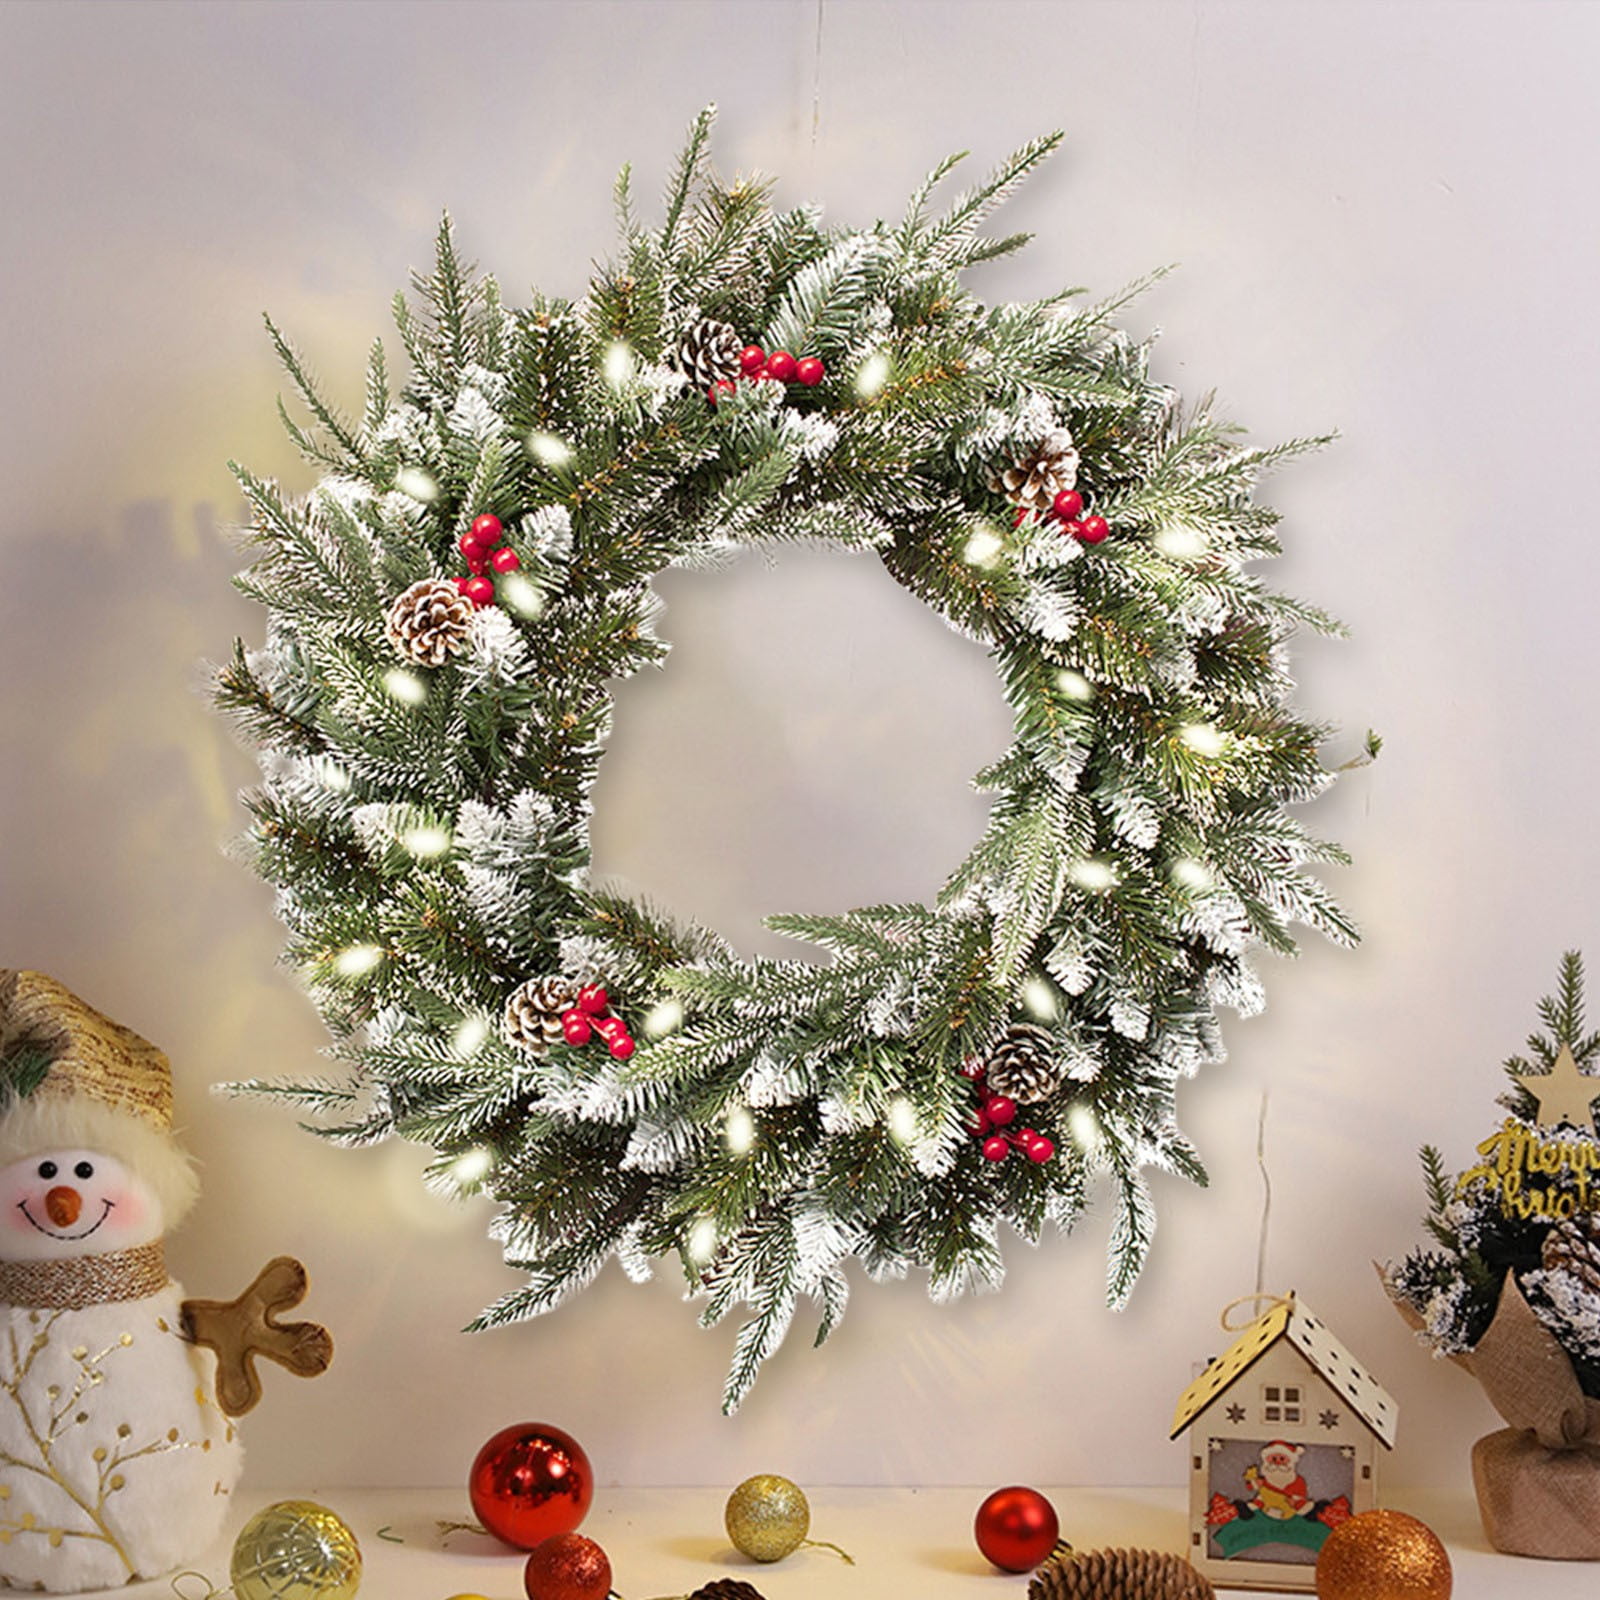 Qepwscx Christmas Wreath, Pre-Lit Artificial Christmas Wreath for ...